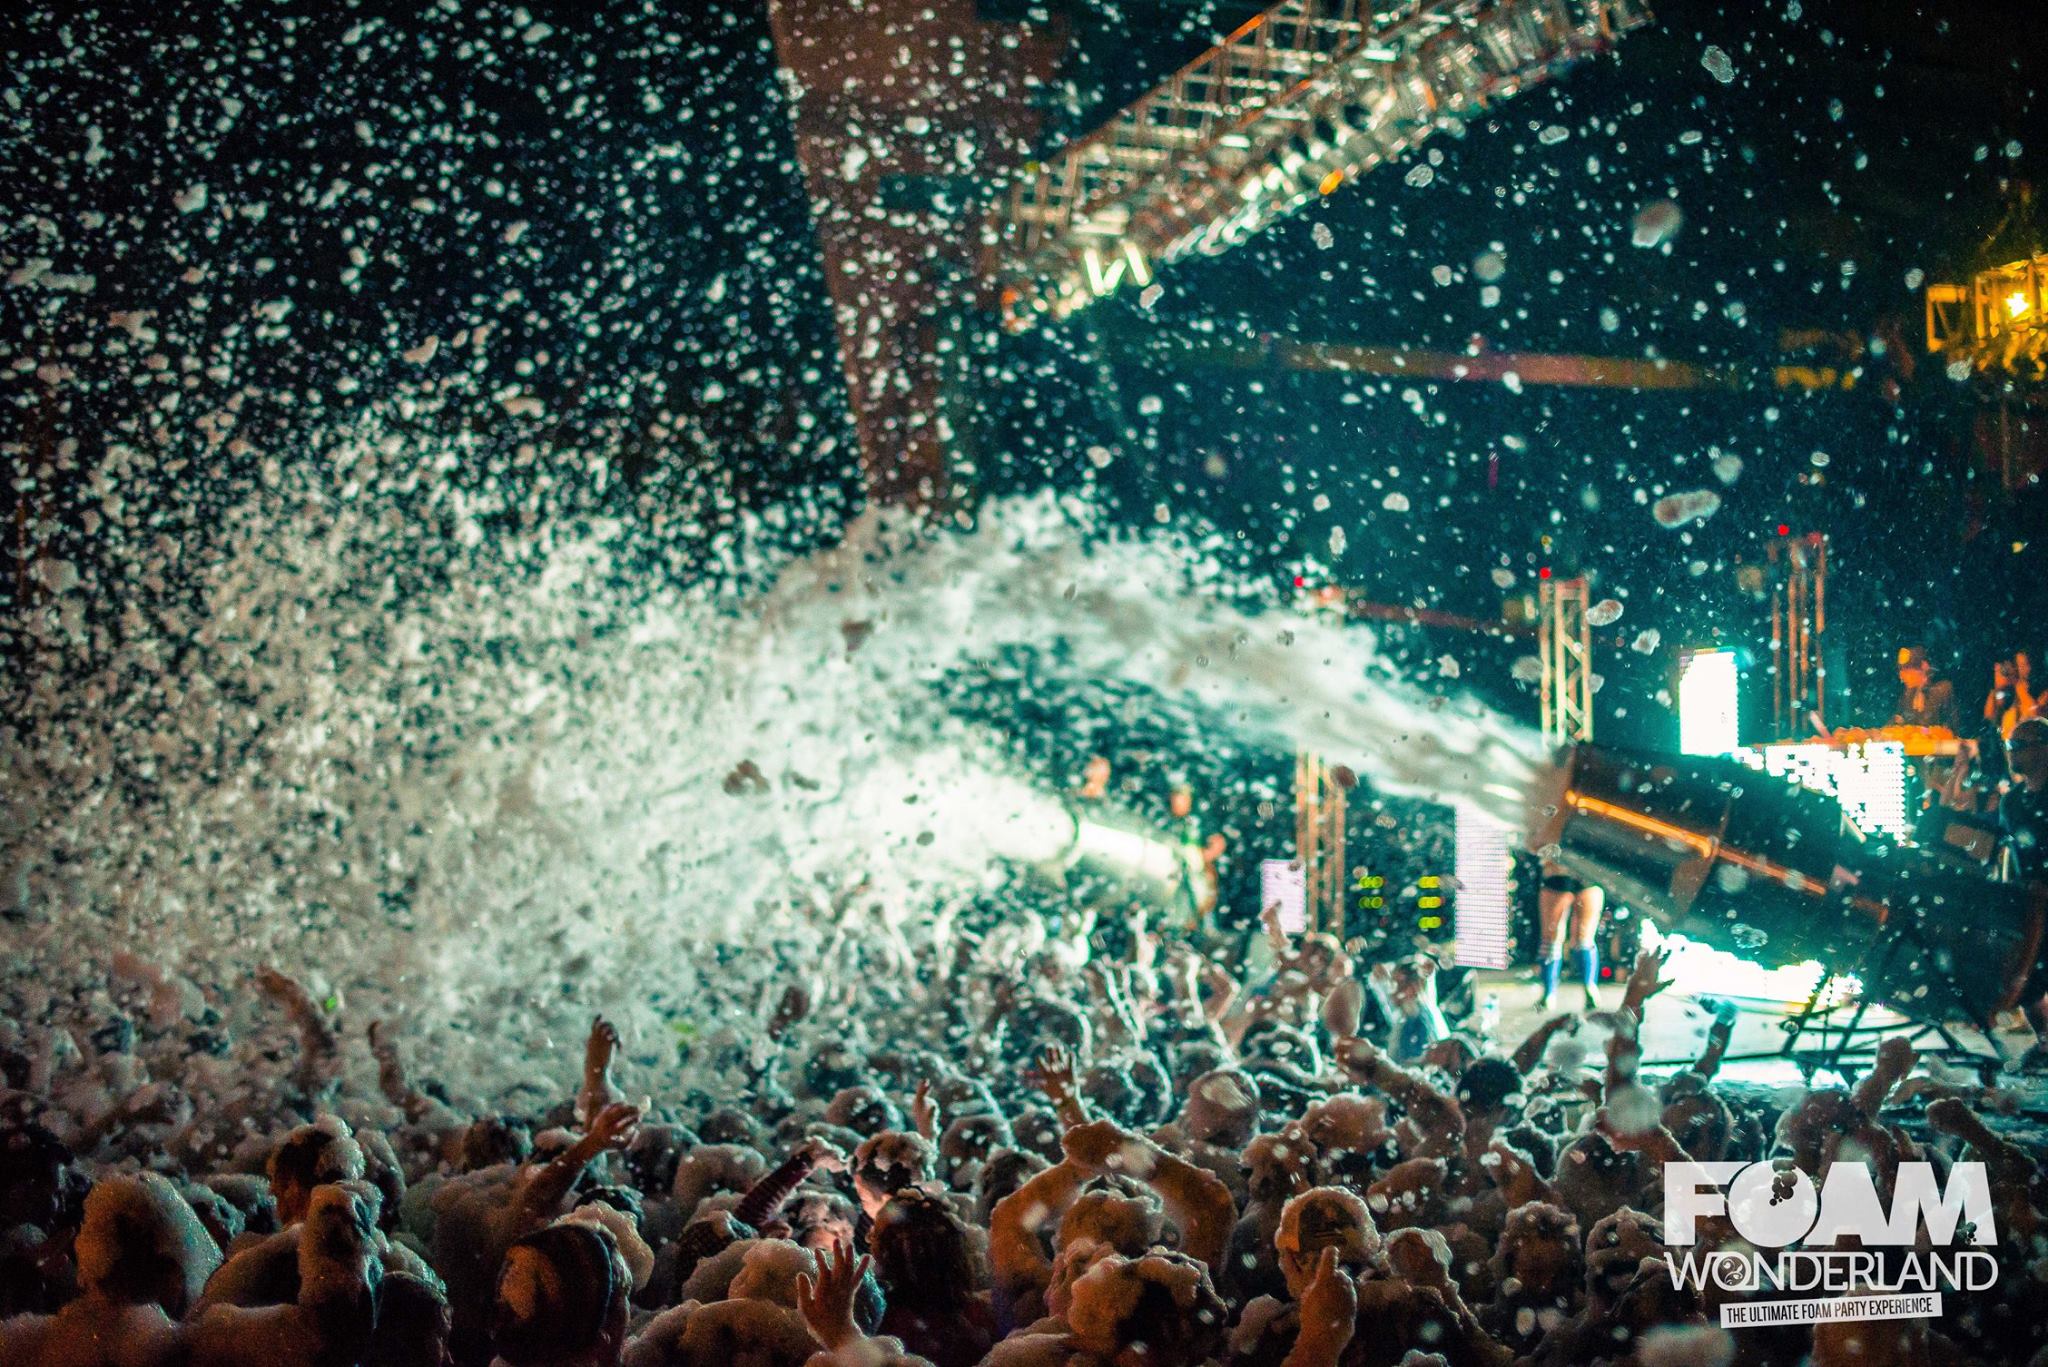 Foam Wonderland "The Ultimate Foam Party Experience" Returns to Denver